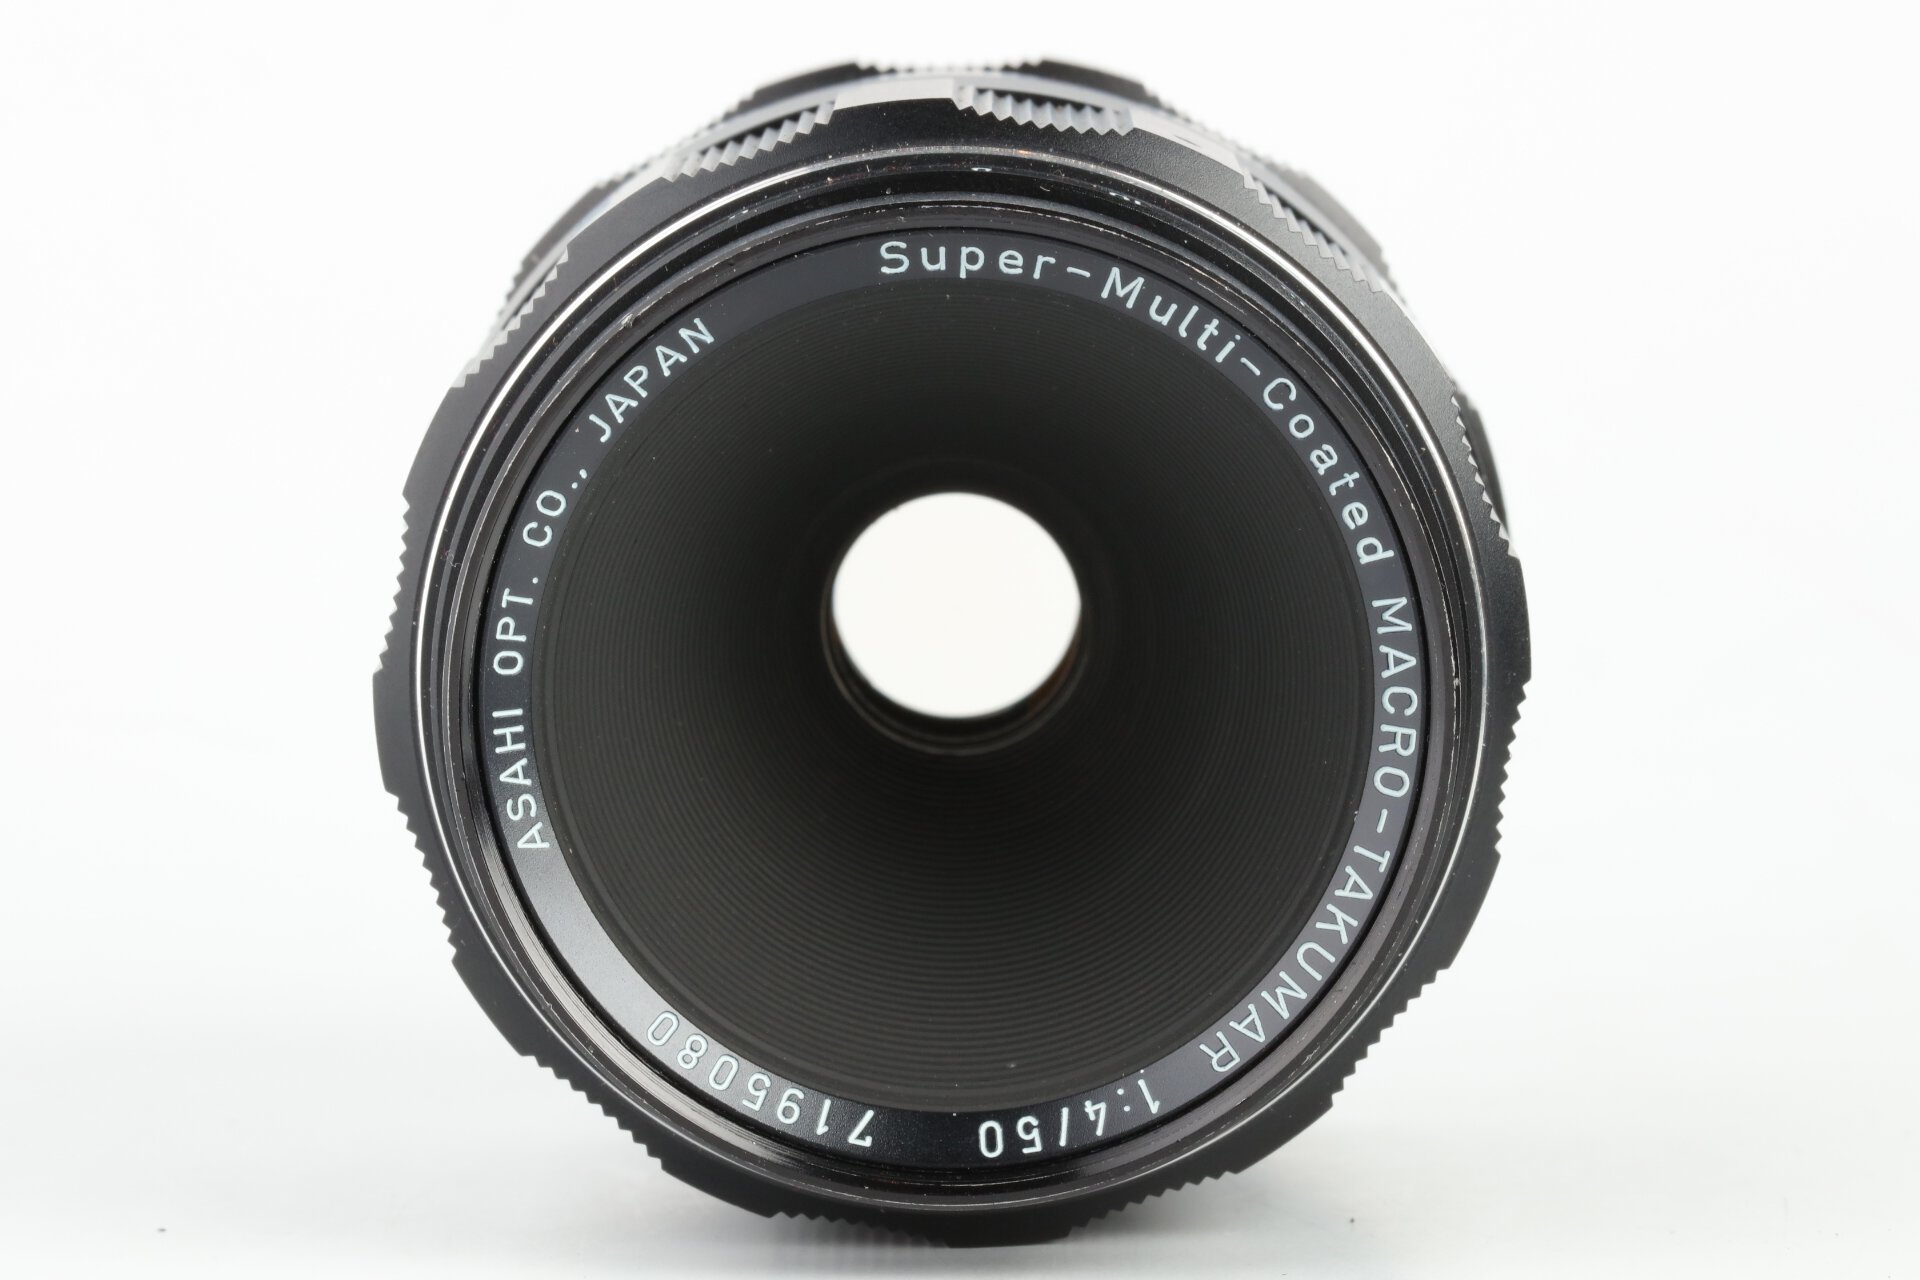 Pentax 4/50mm Super-Multi-Coated MACRO-Takumar M42 + Helicoid Extension Tube